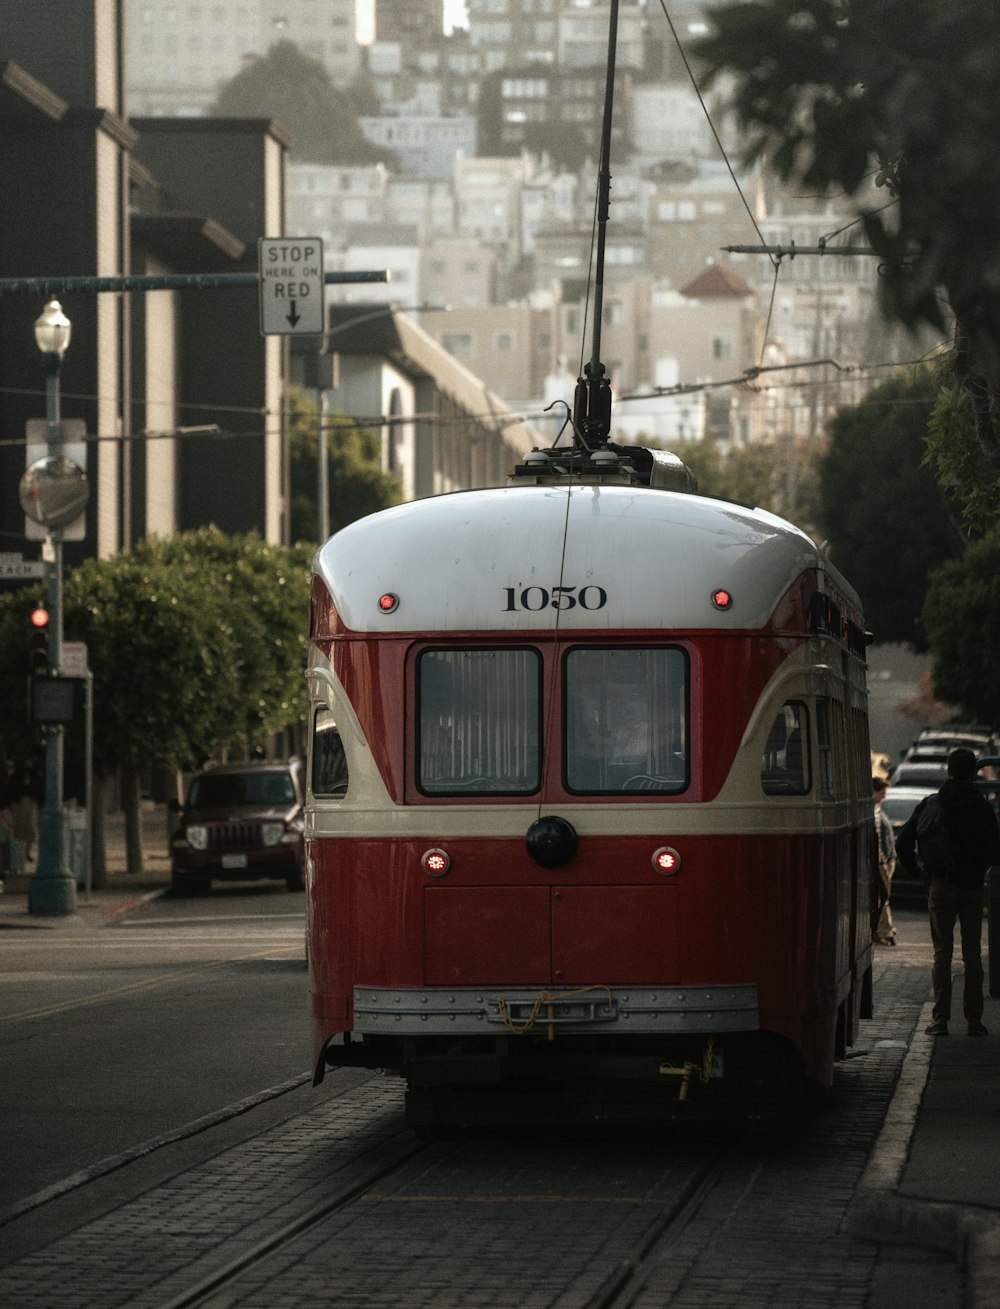 a red trolley car on a street